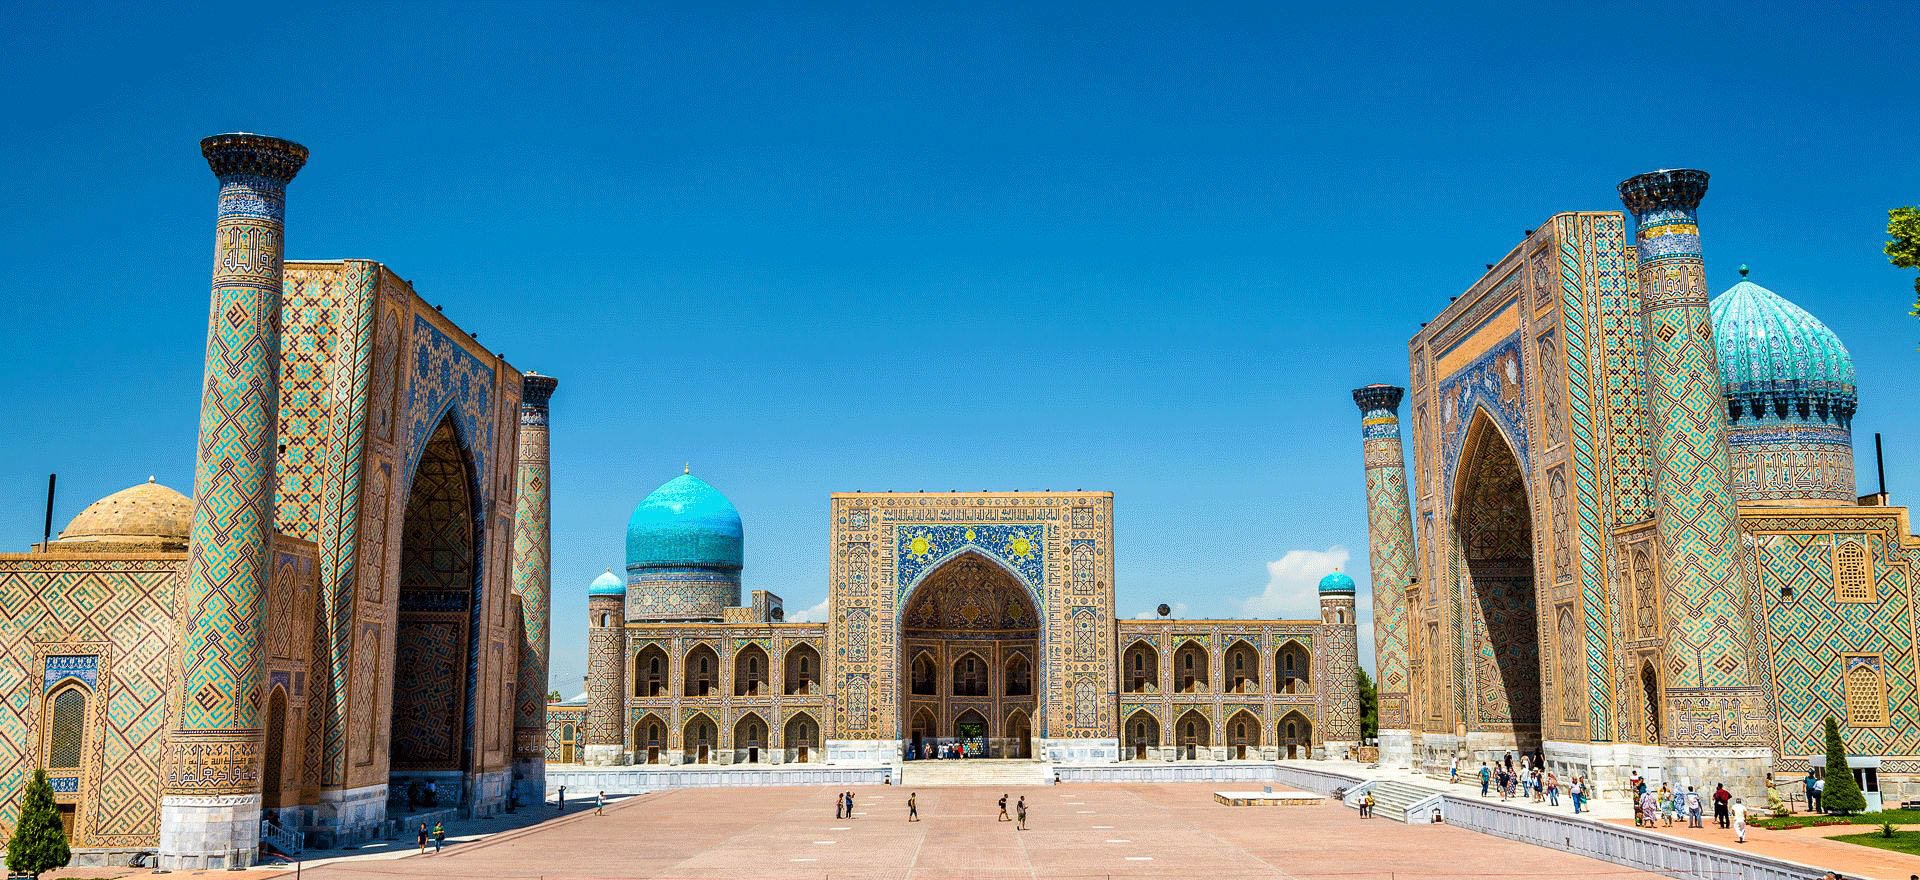 Registan Square, Samarkand - Uzbekistan tours